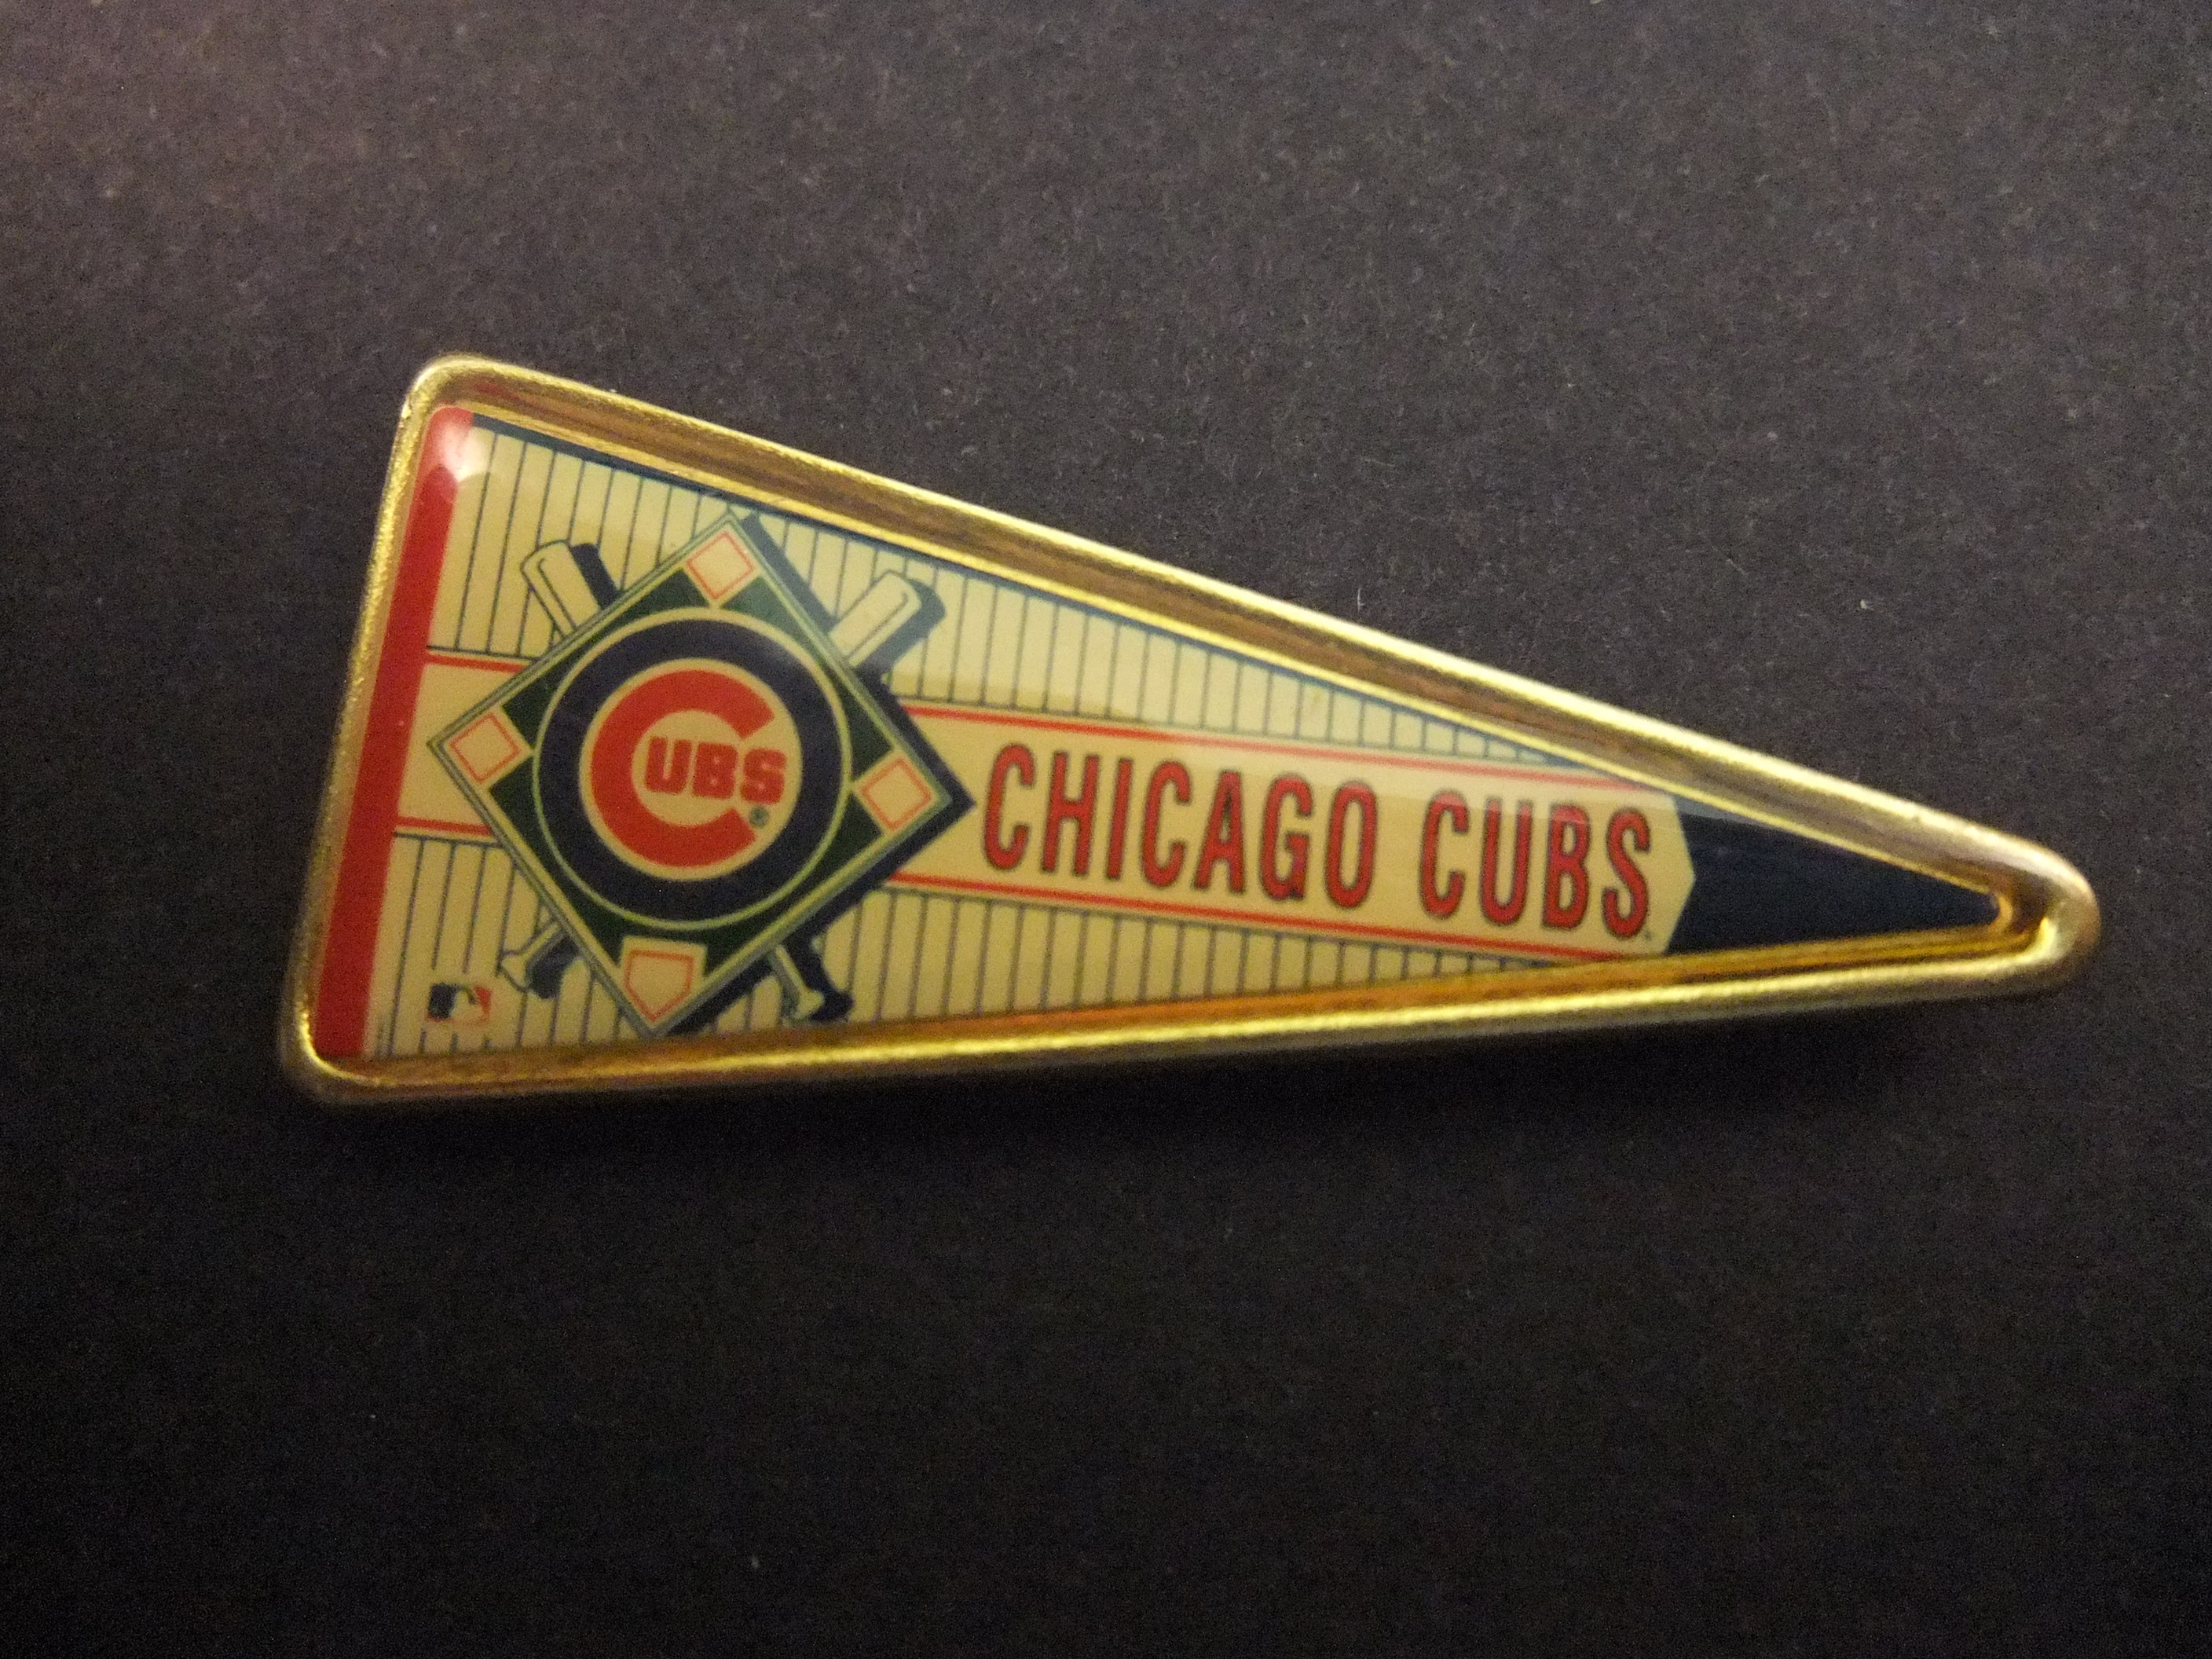 The Chicago Cubs baseballteam Chicago, Illinois